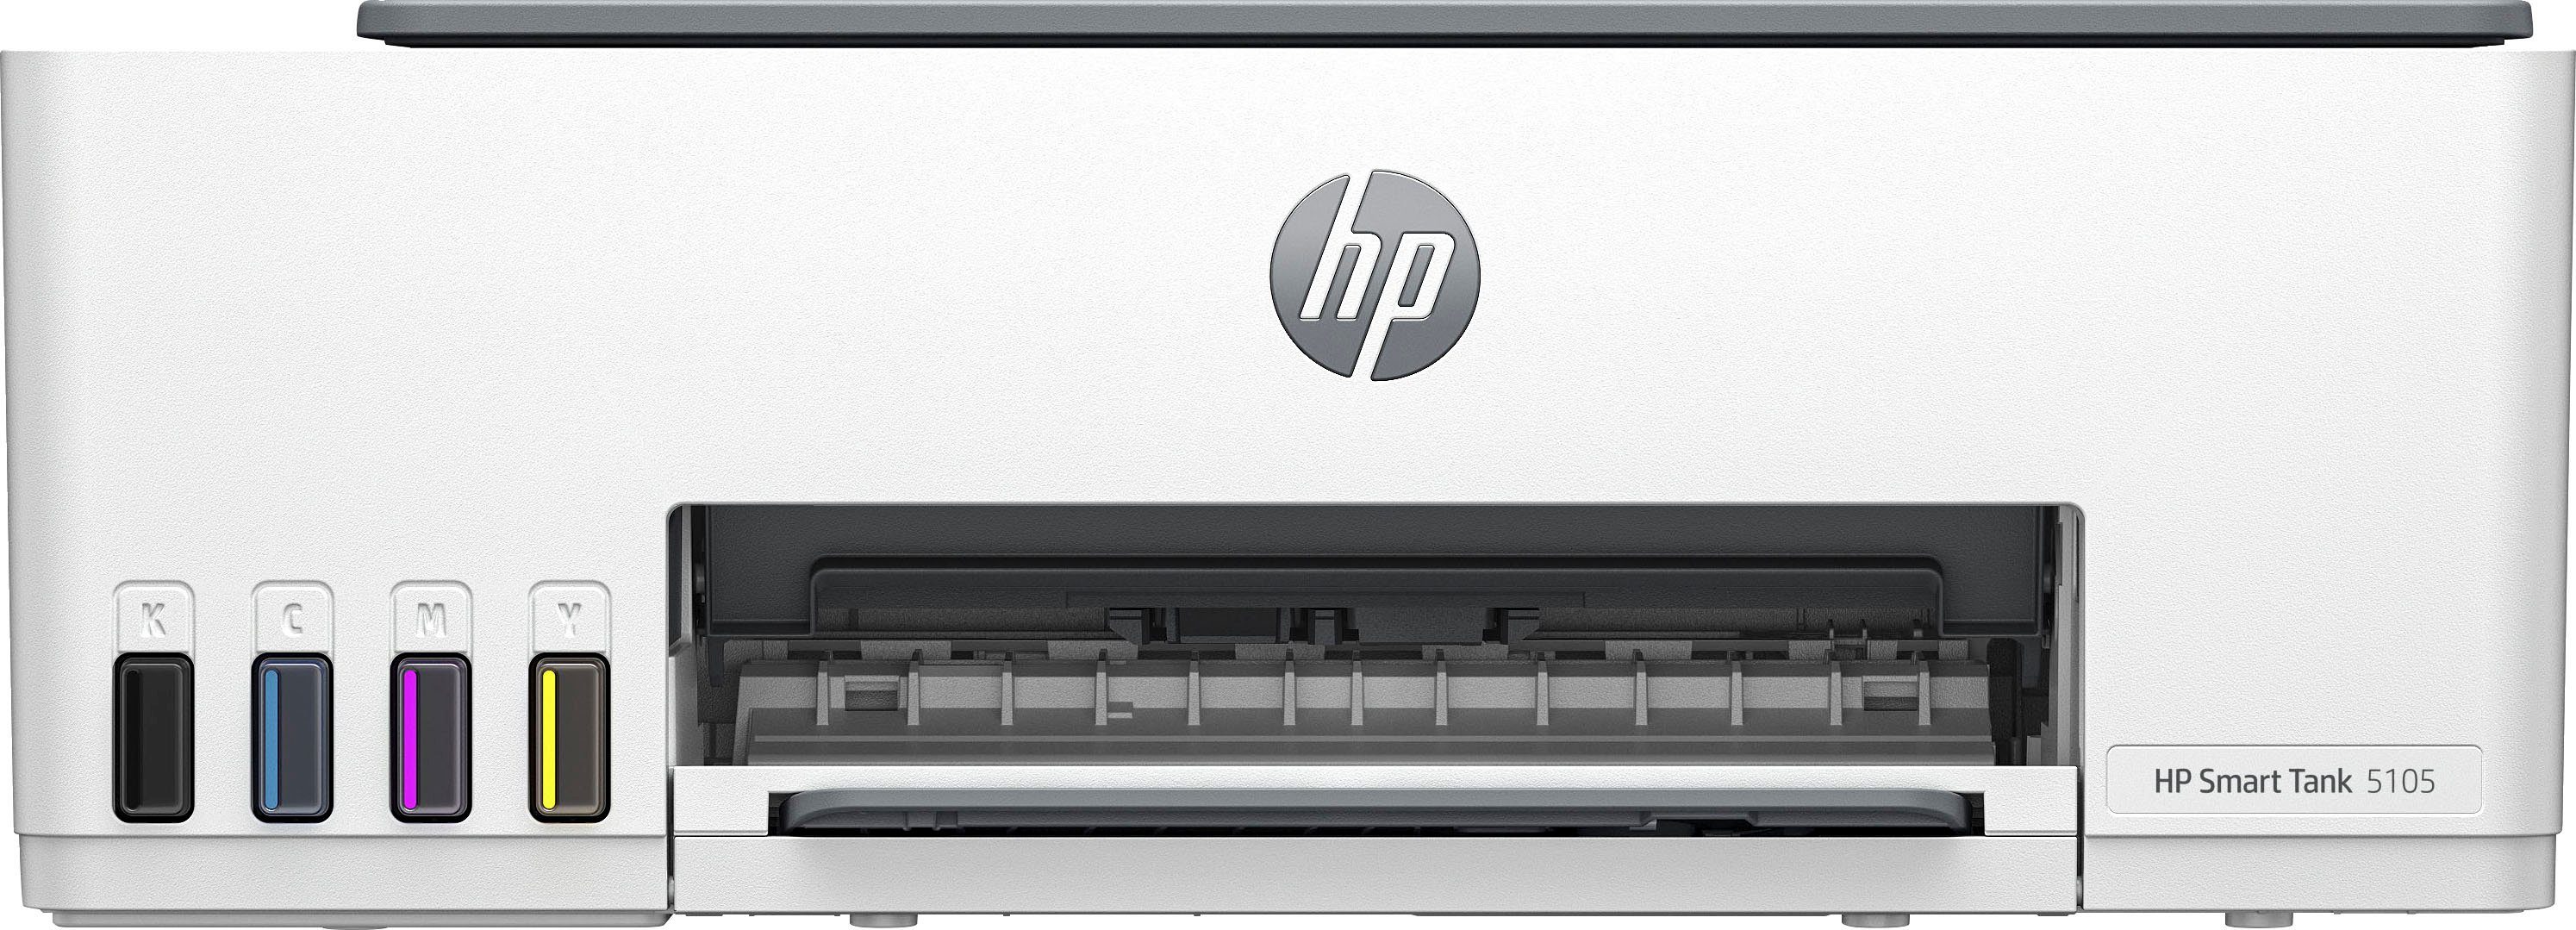 HP Smart Tank 5105 HP (Bluetooth, Multifunktionsdrucker, WLAN Instant (Wi-Fi), kompatibel) Ink